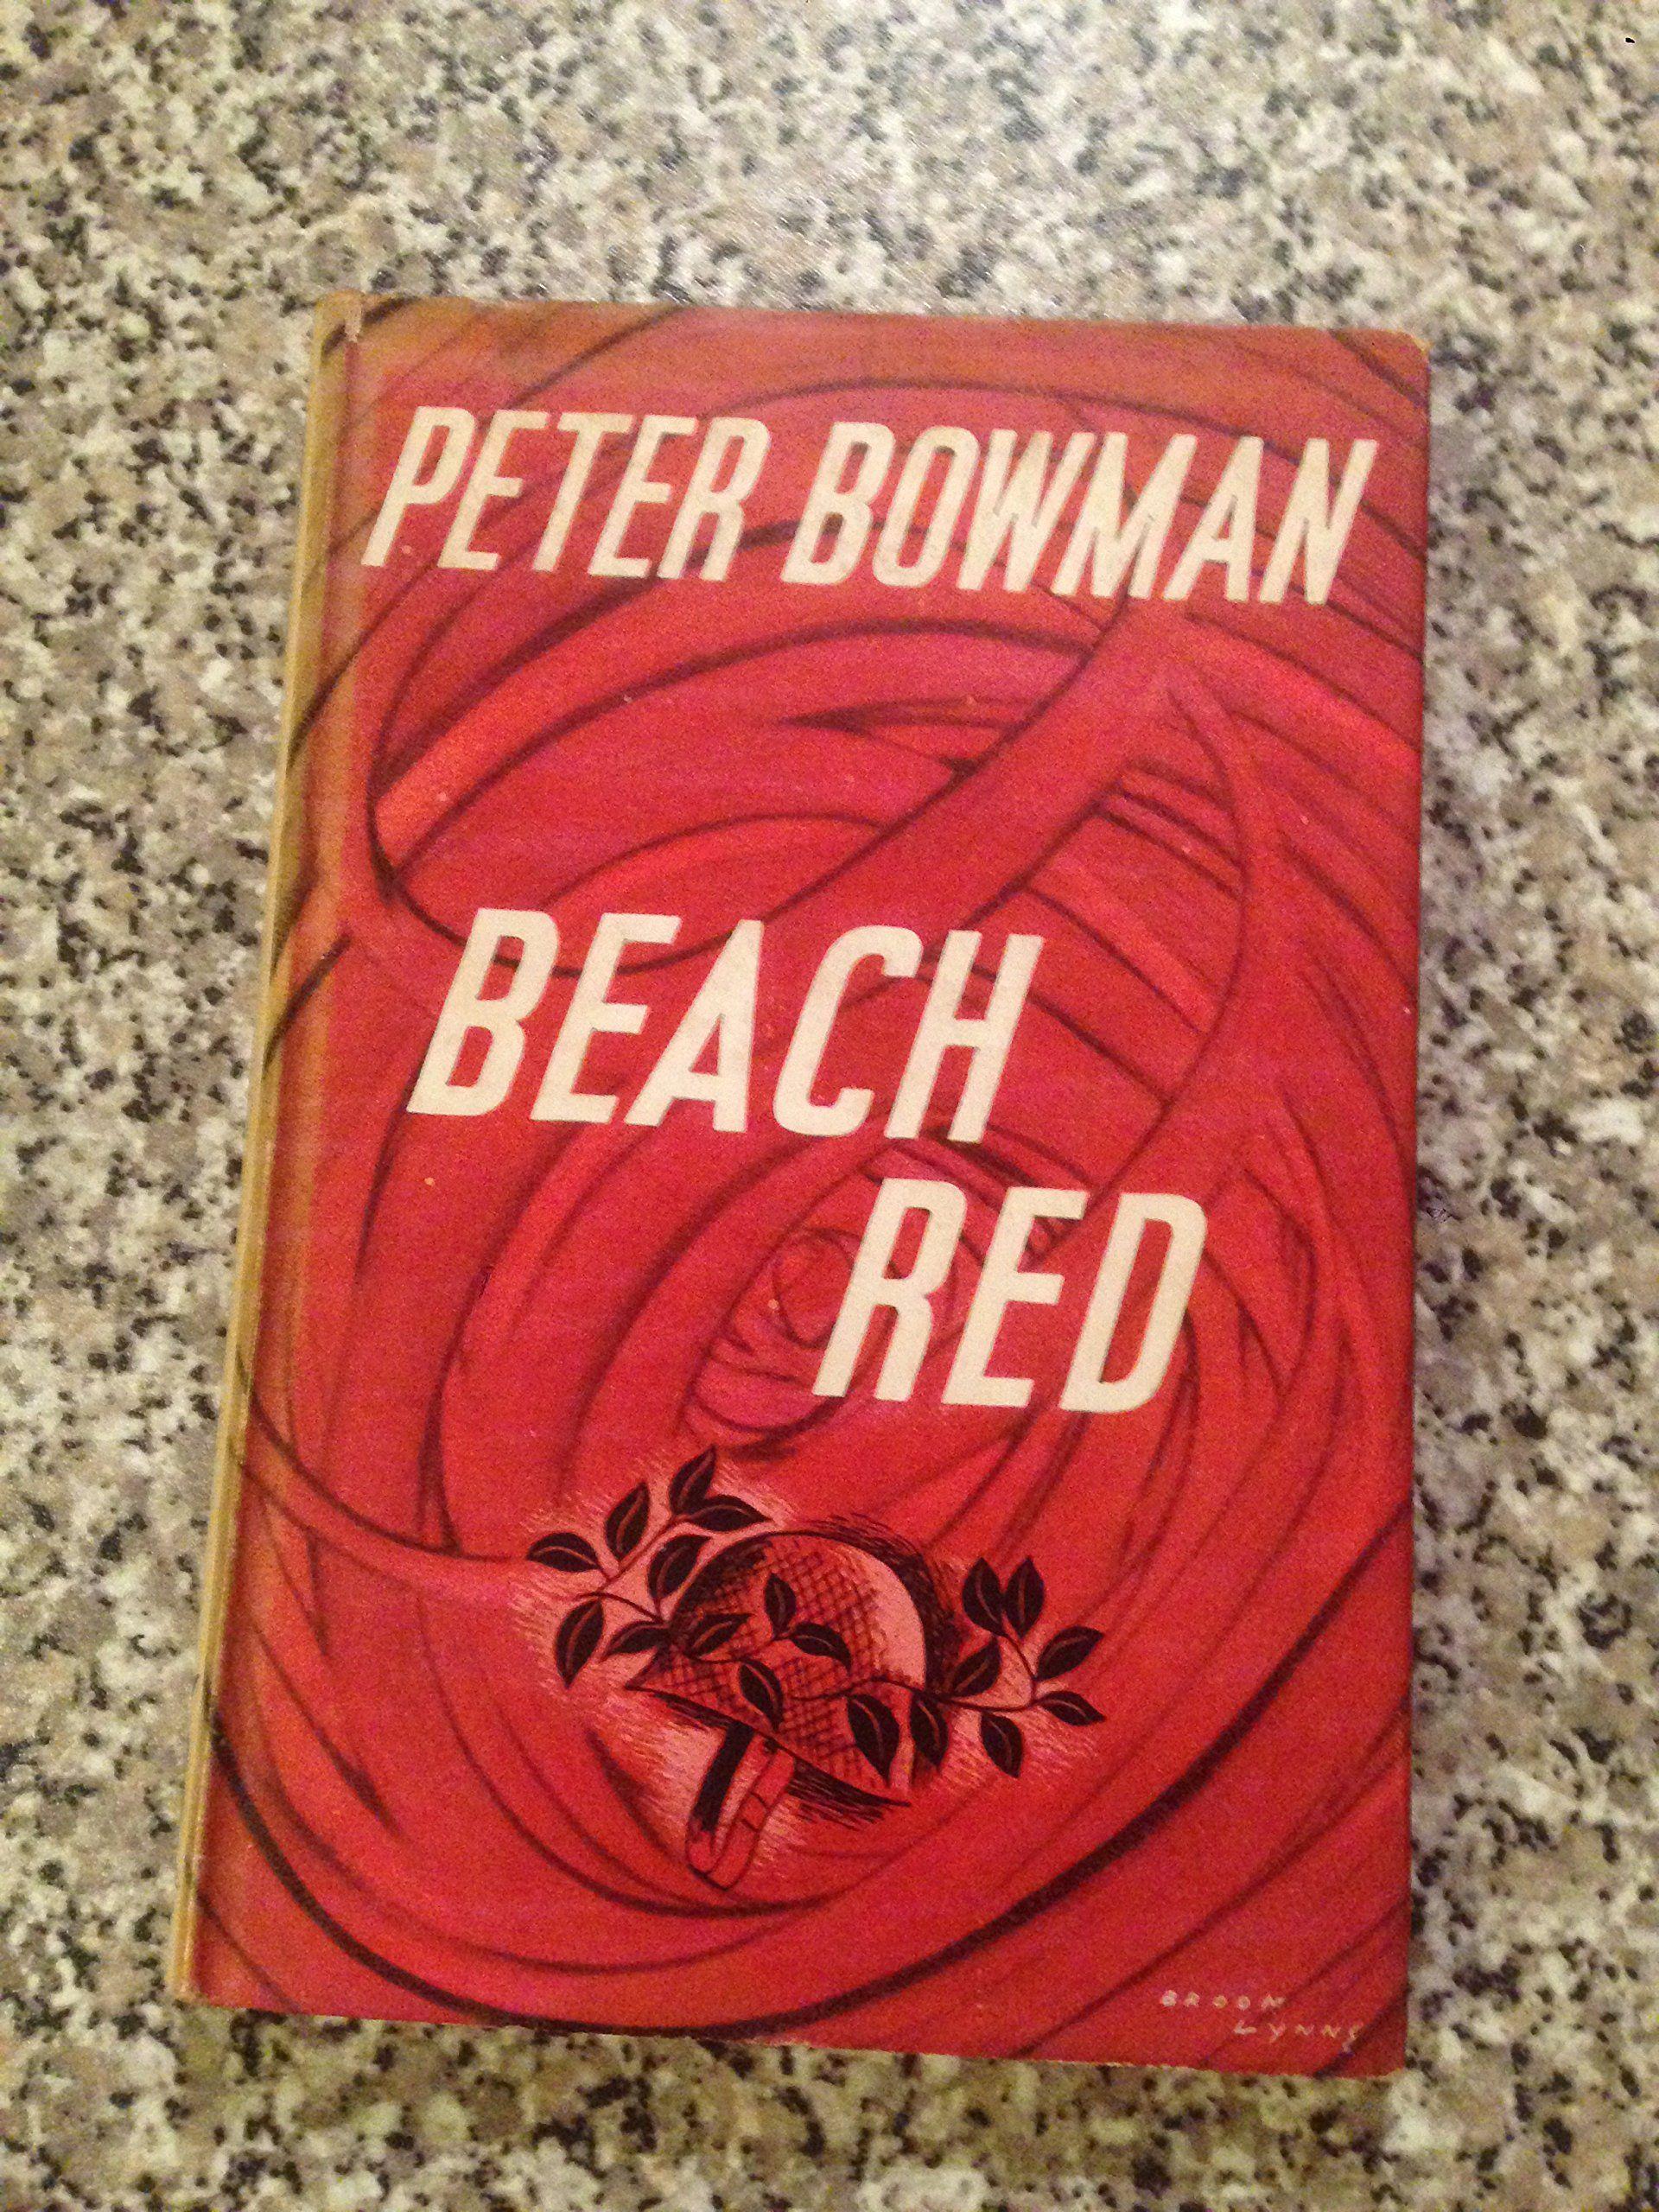 Red Bowman Logo - Beach Red: Amazon.co.uk: Peter Bowman: Books